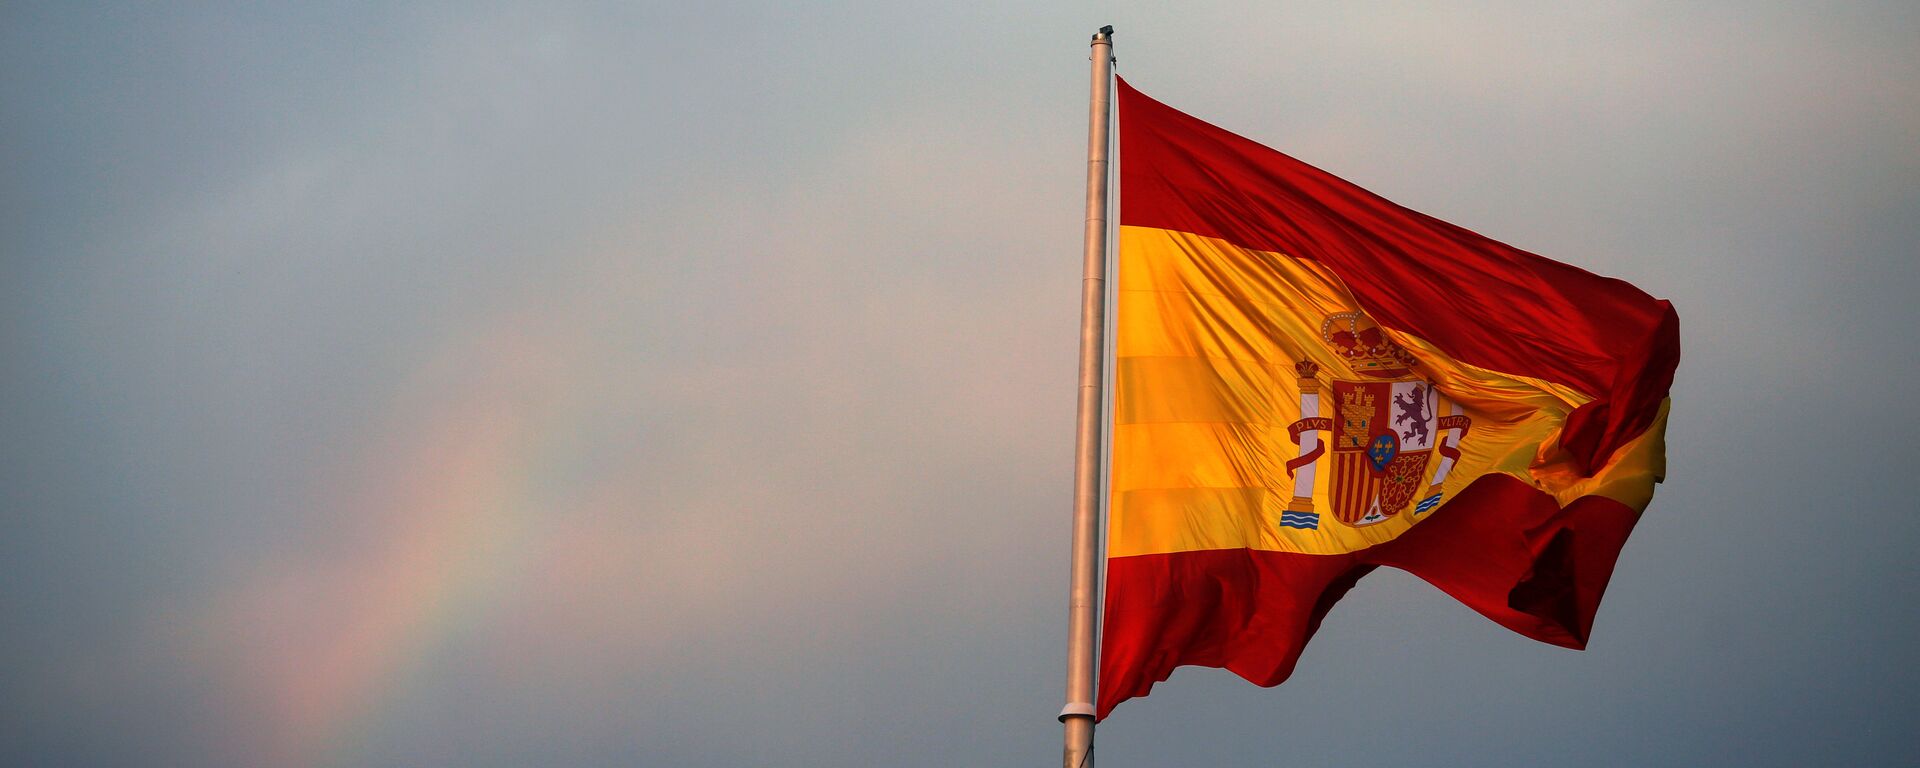 Bandera de España - Sputnik Mundo, 1920, 16.11.2018